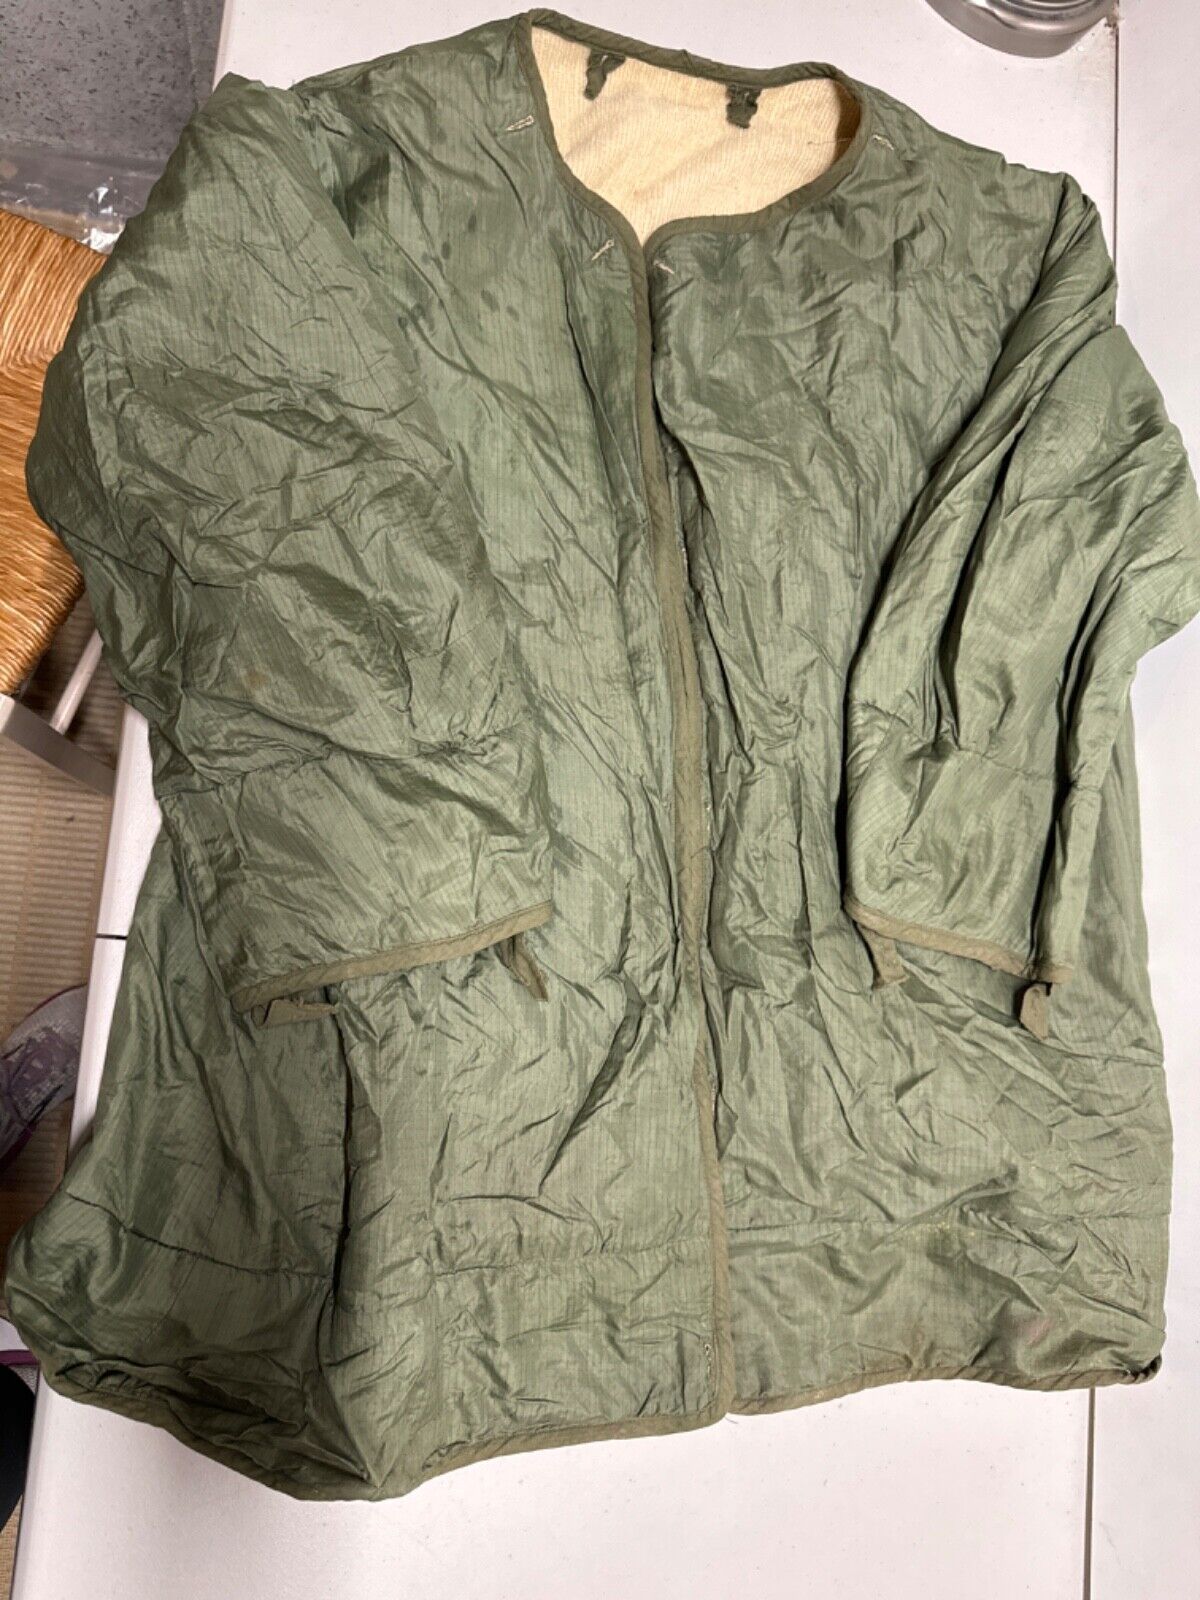 Vintage US Military Field Jacket cold weather liner